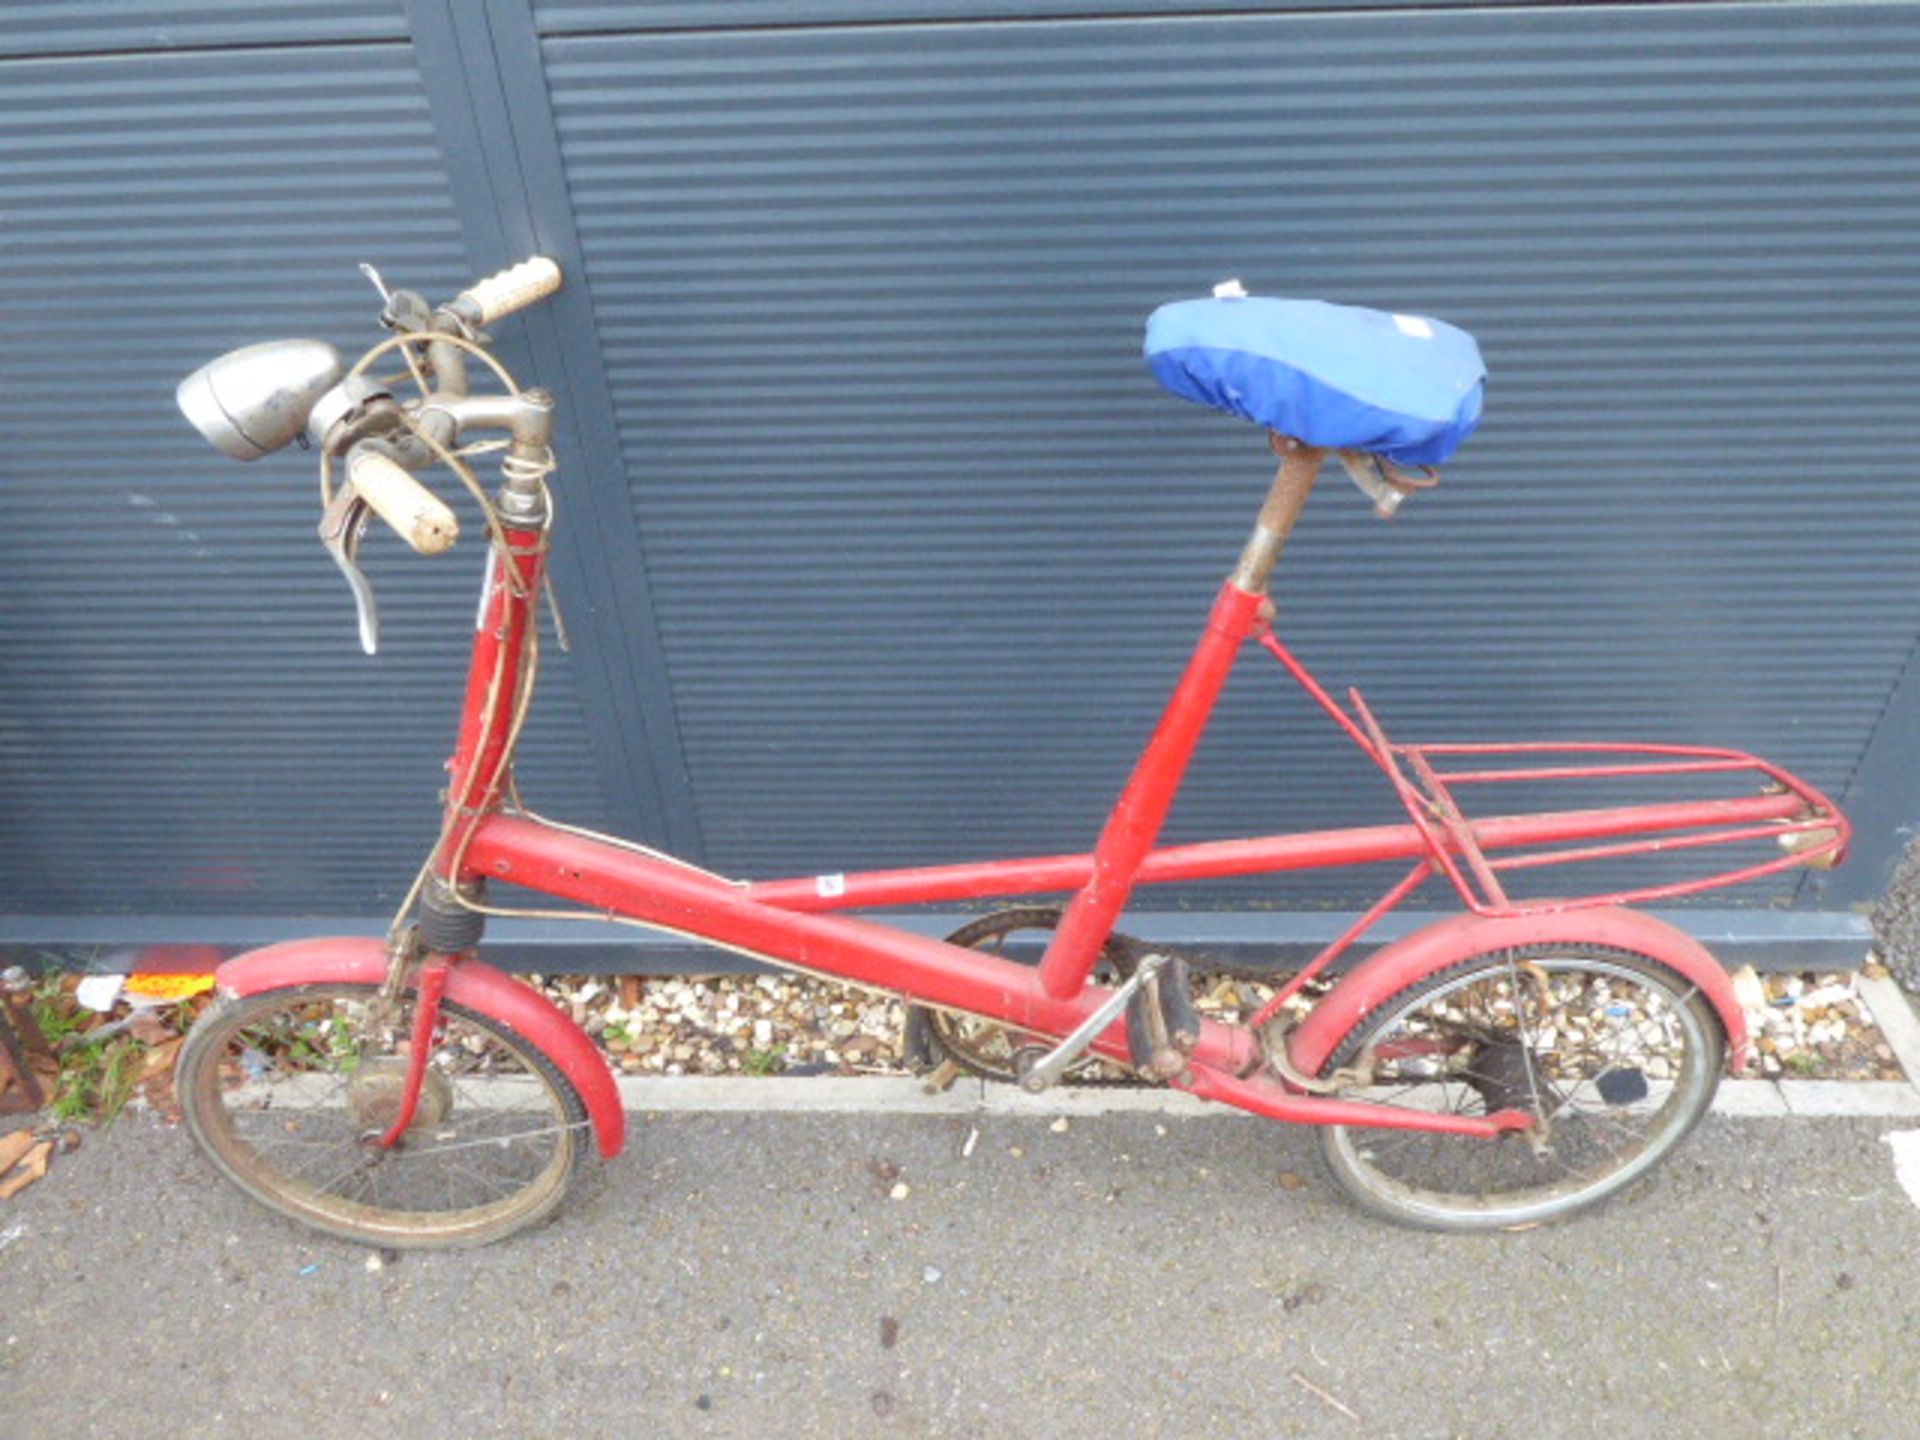 Vintage Moulton four-speed red bike